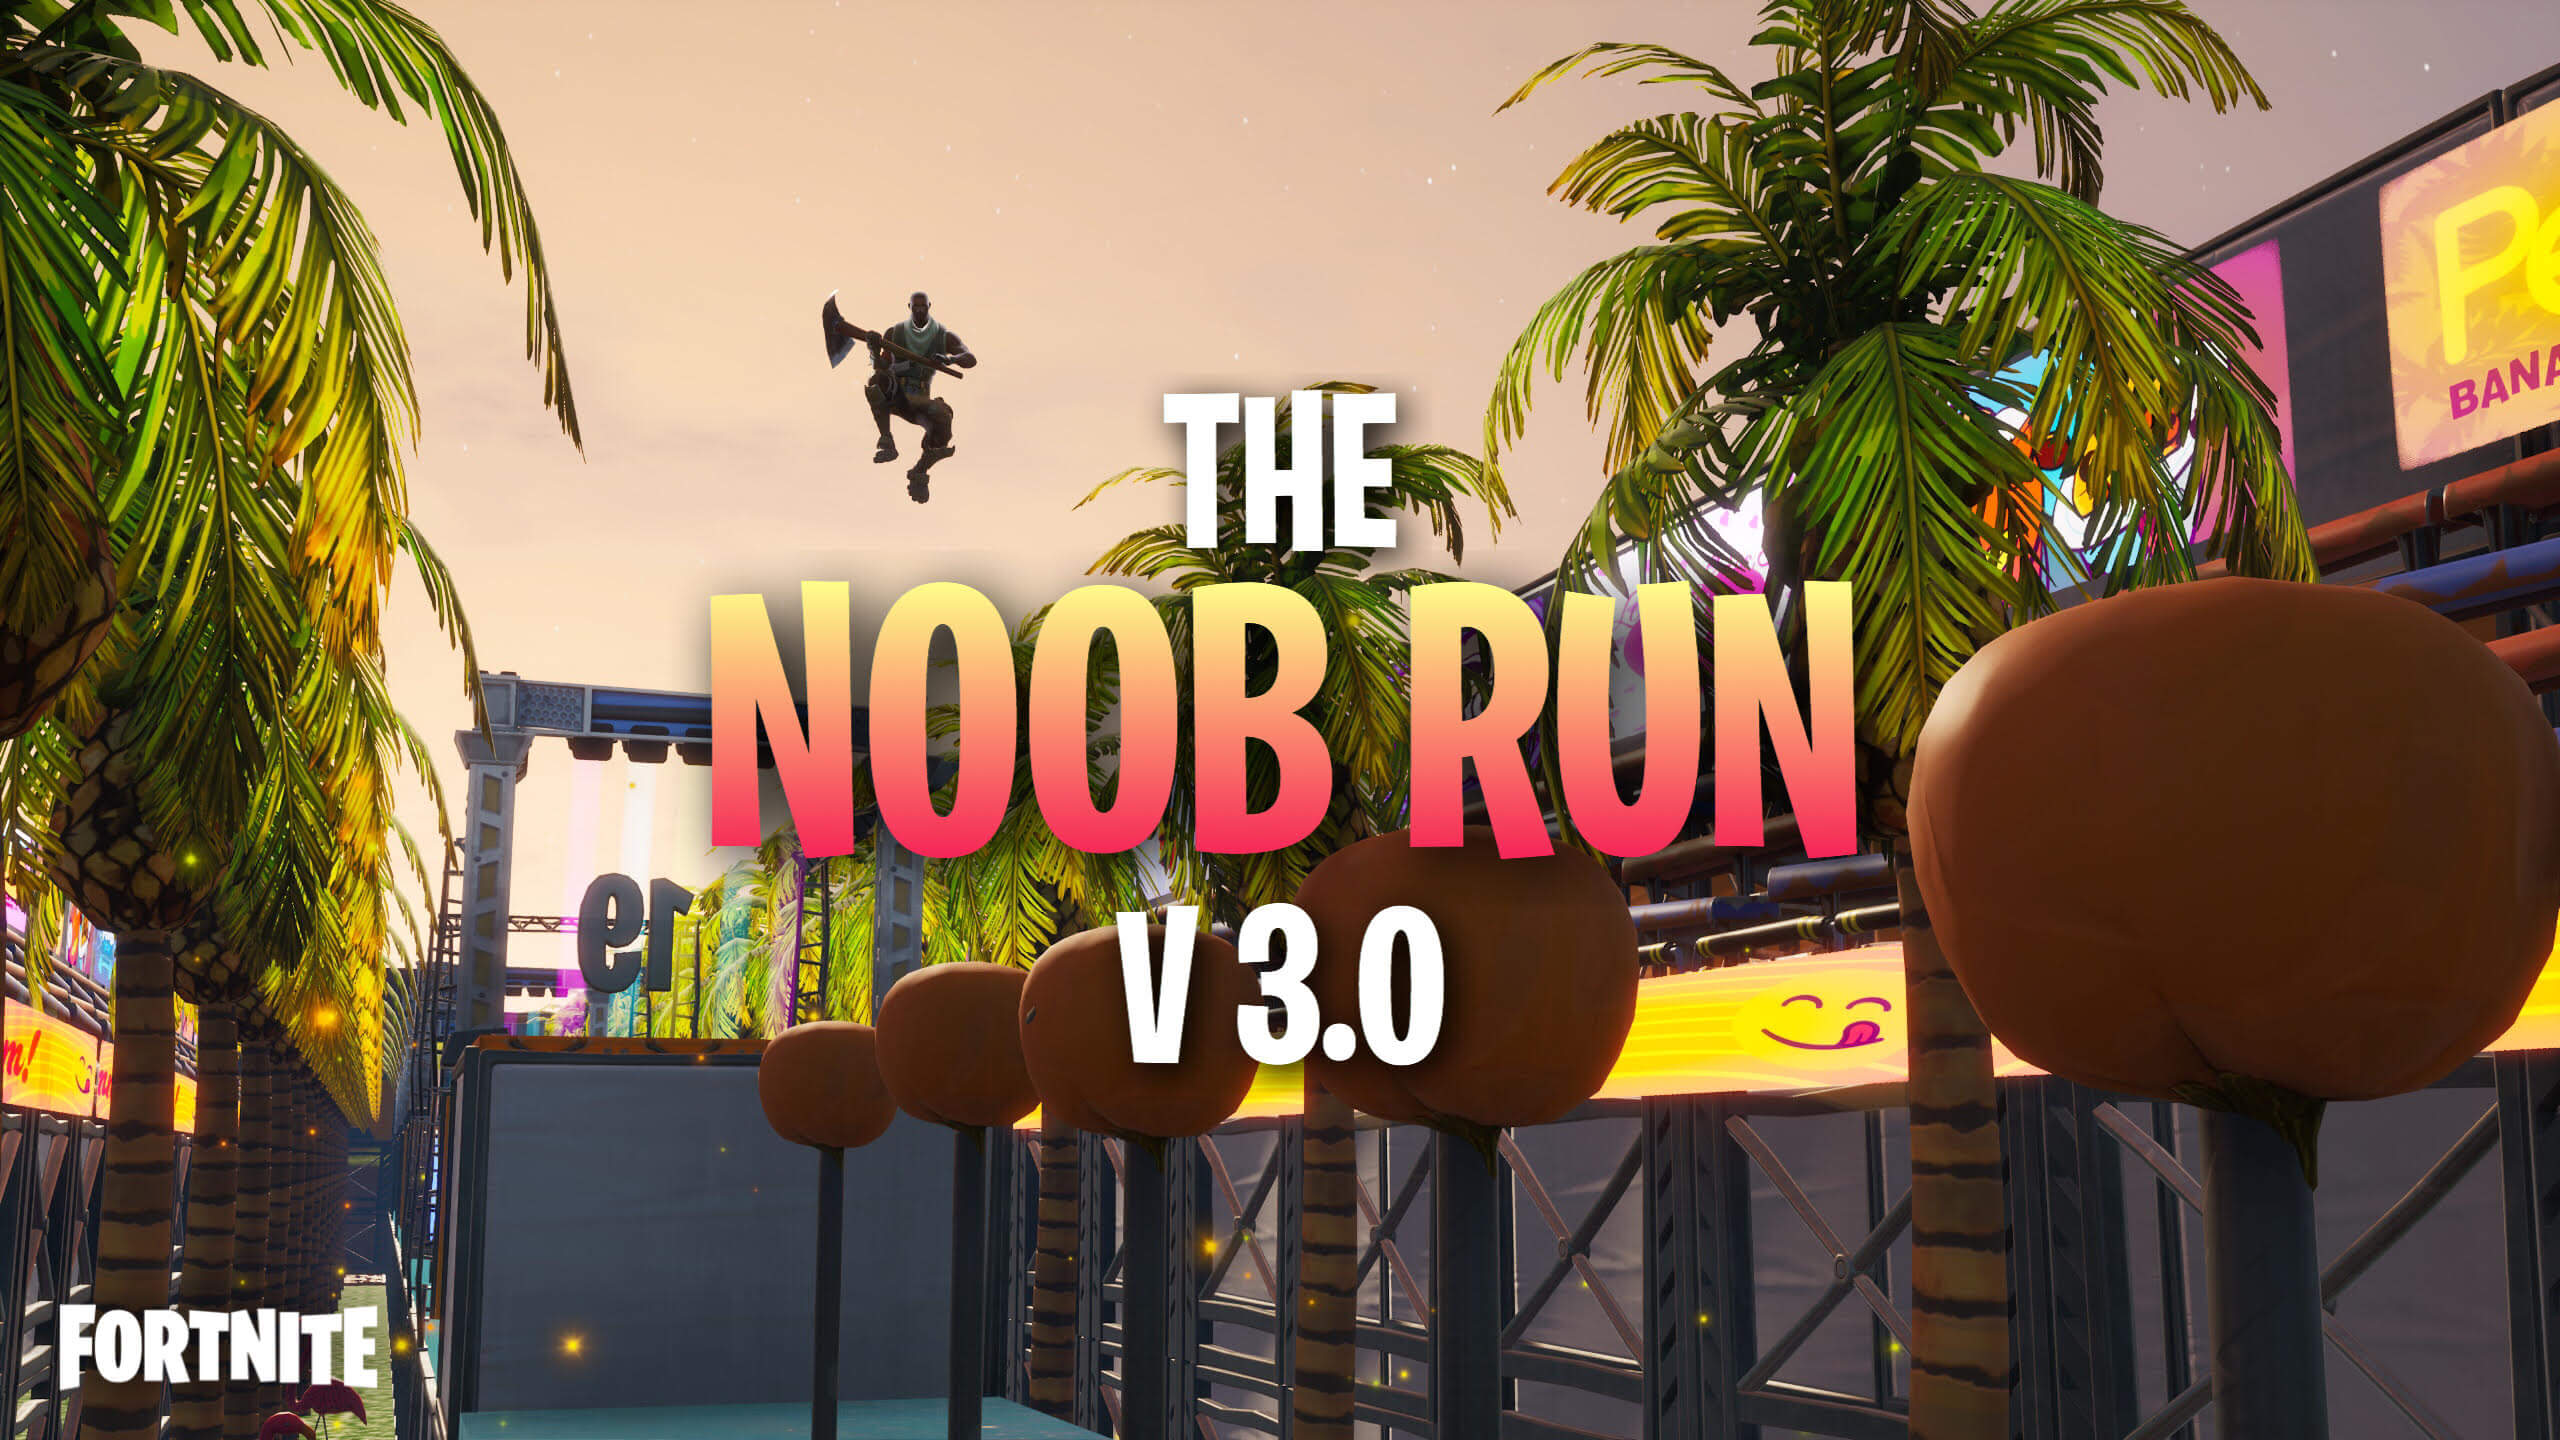 THE NOOB RUN 3.0